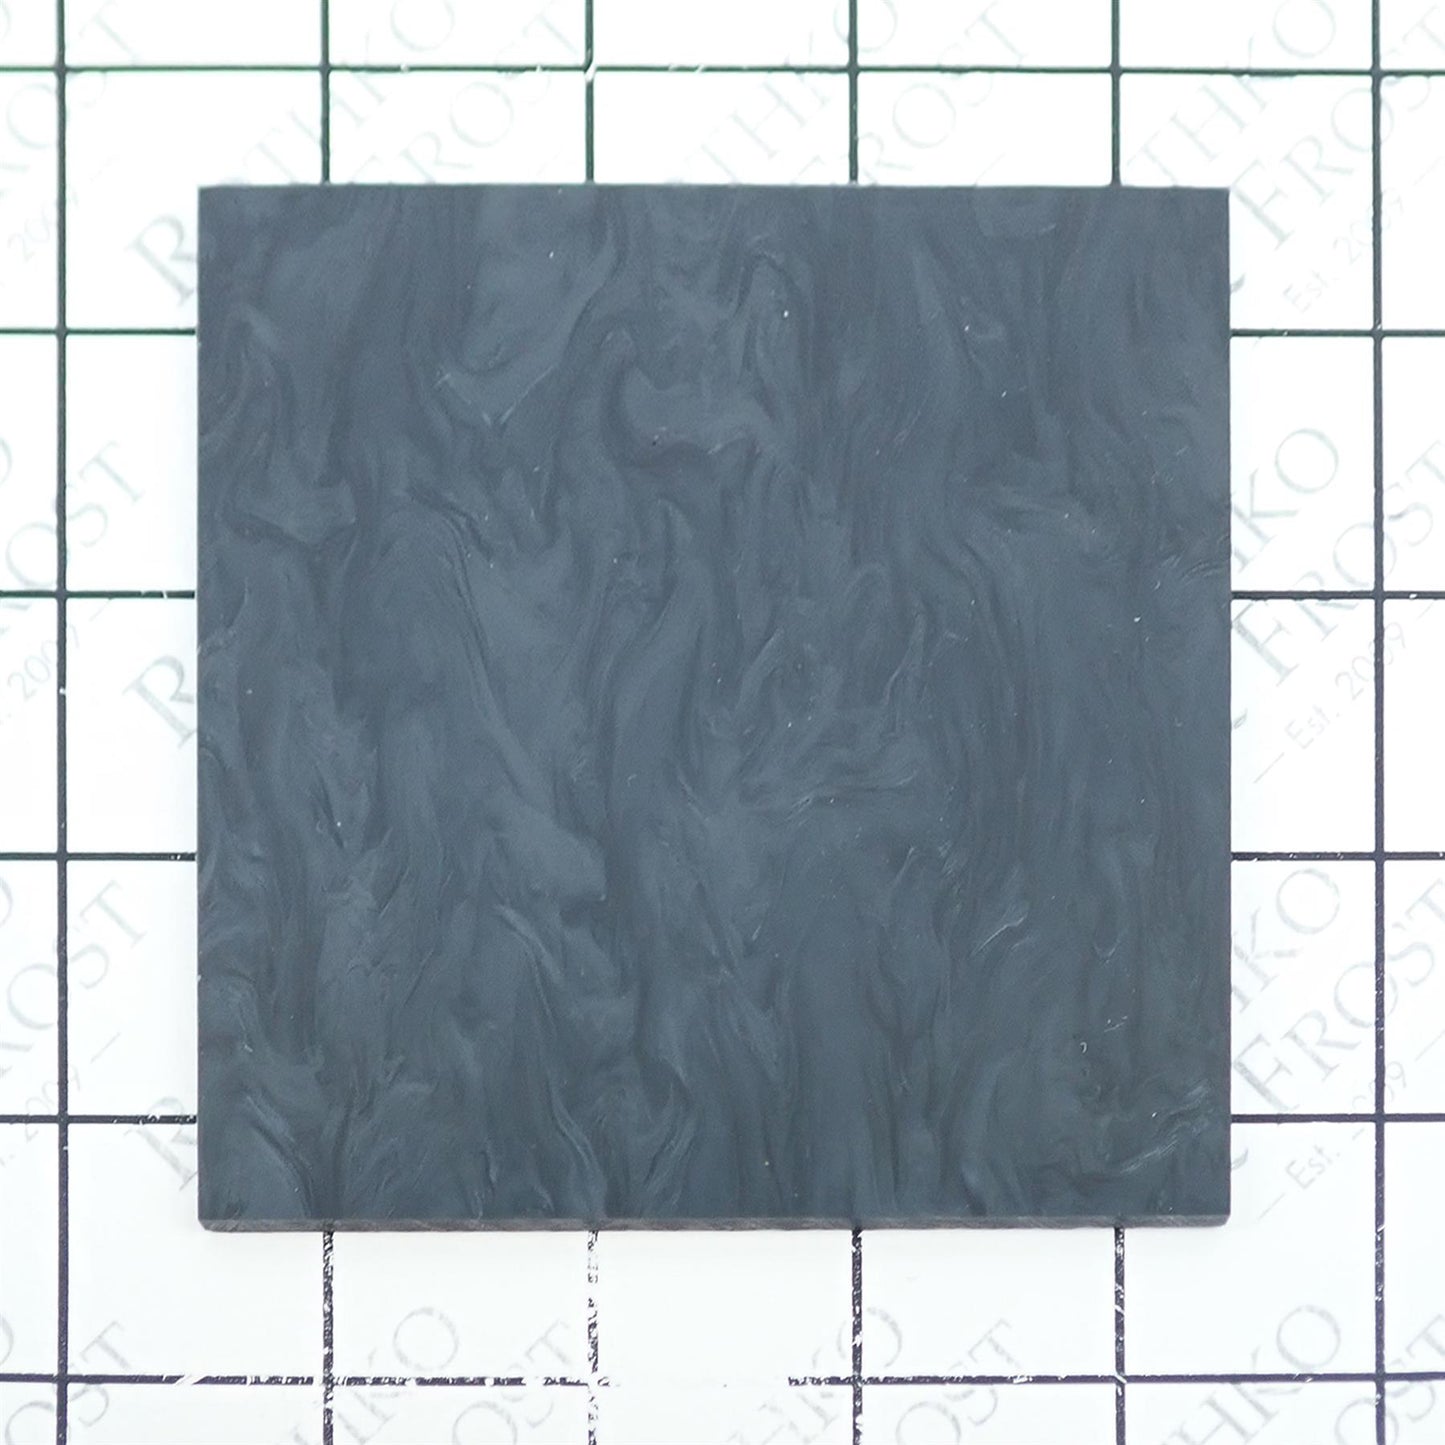 Incudo Dark Grey Pearl Acrylic Sheet - 1000x600x3mm (39.4x23.62x0.12")